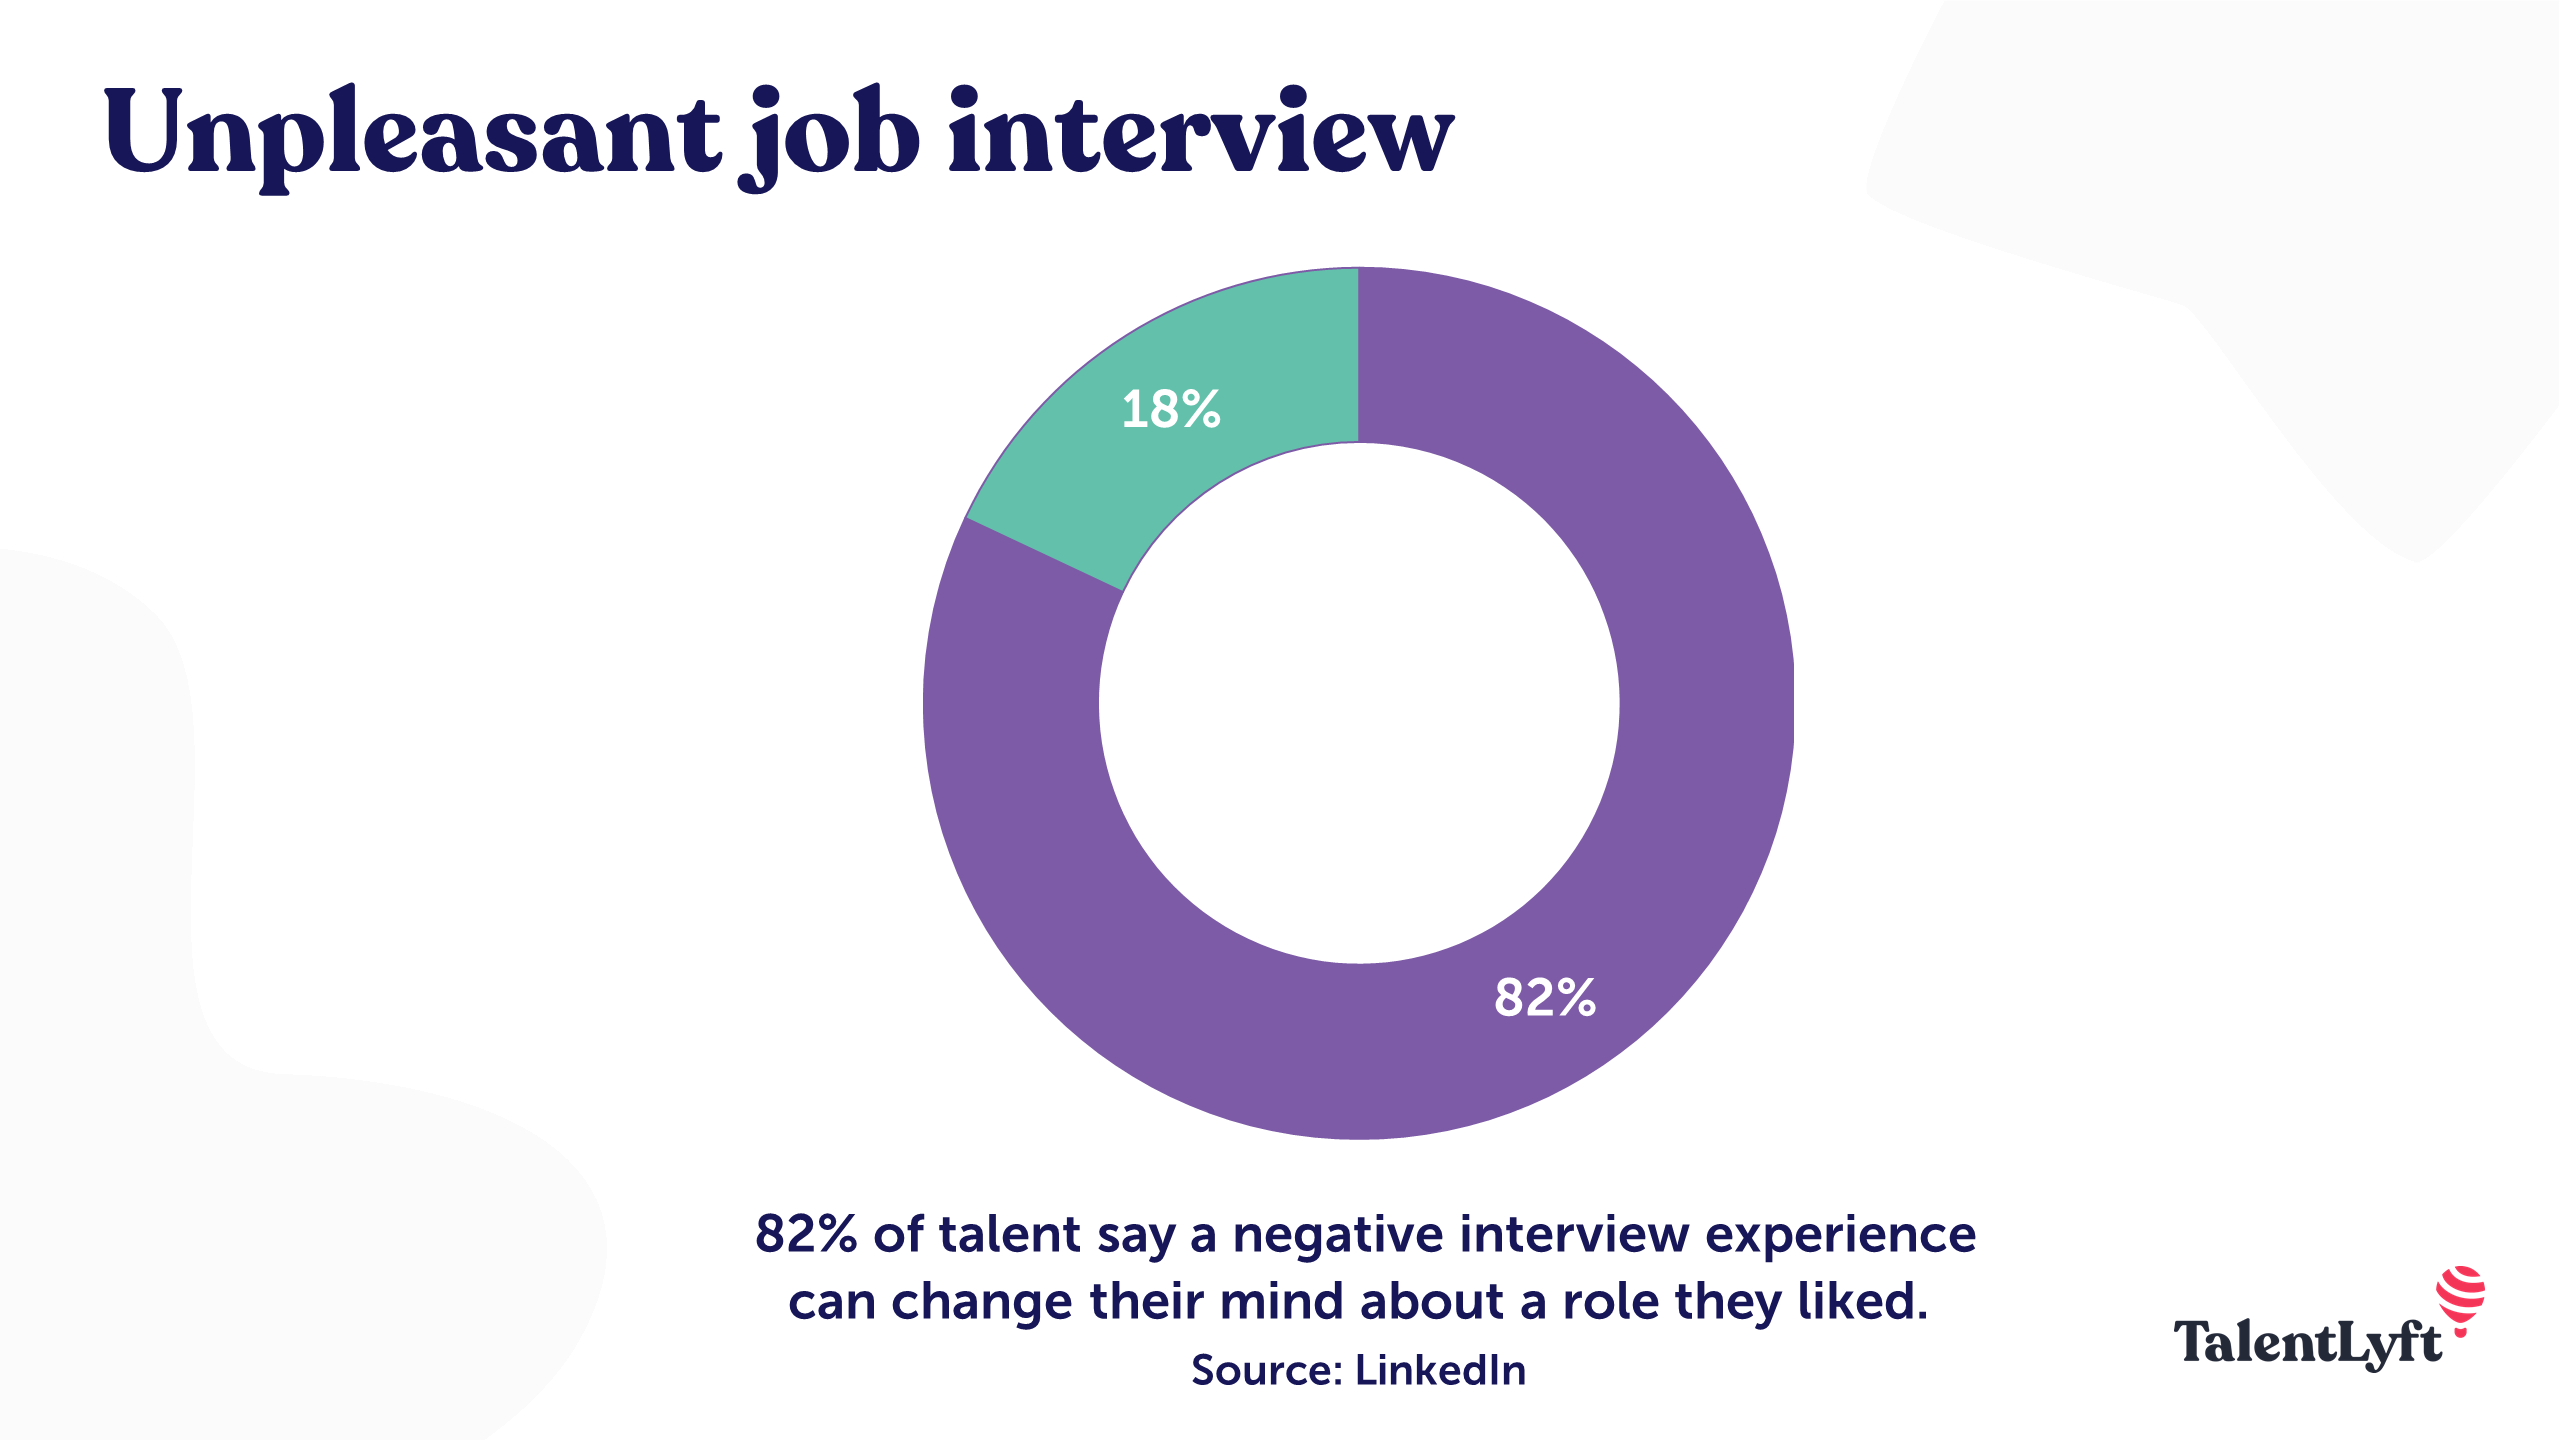 Unpleasant job interview experience